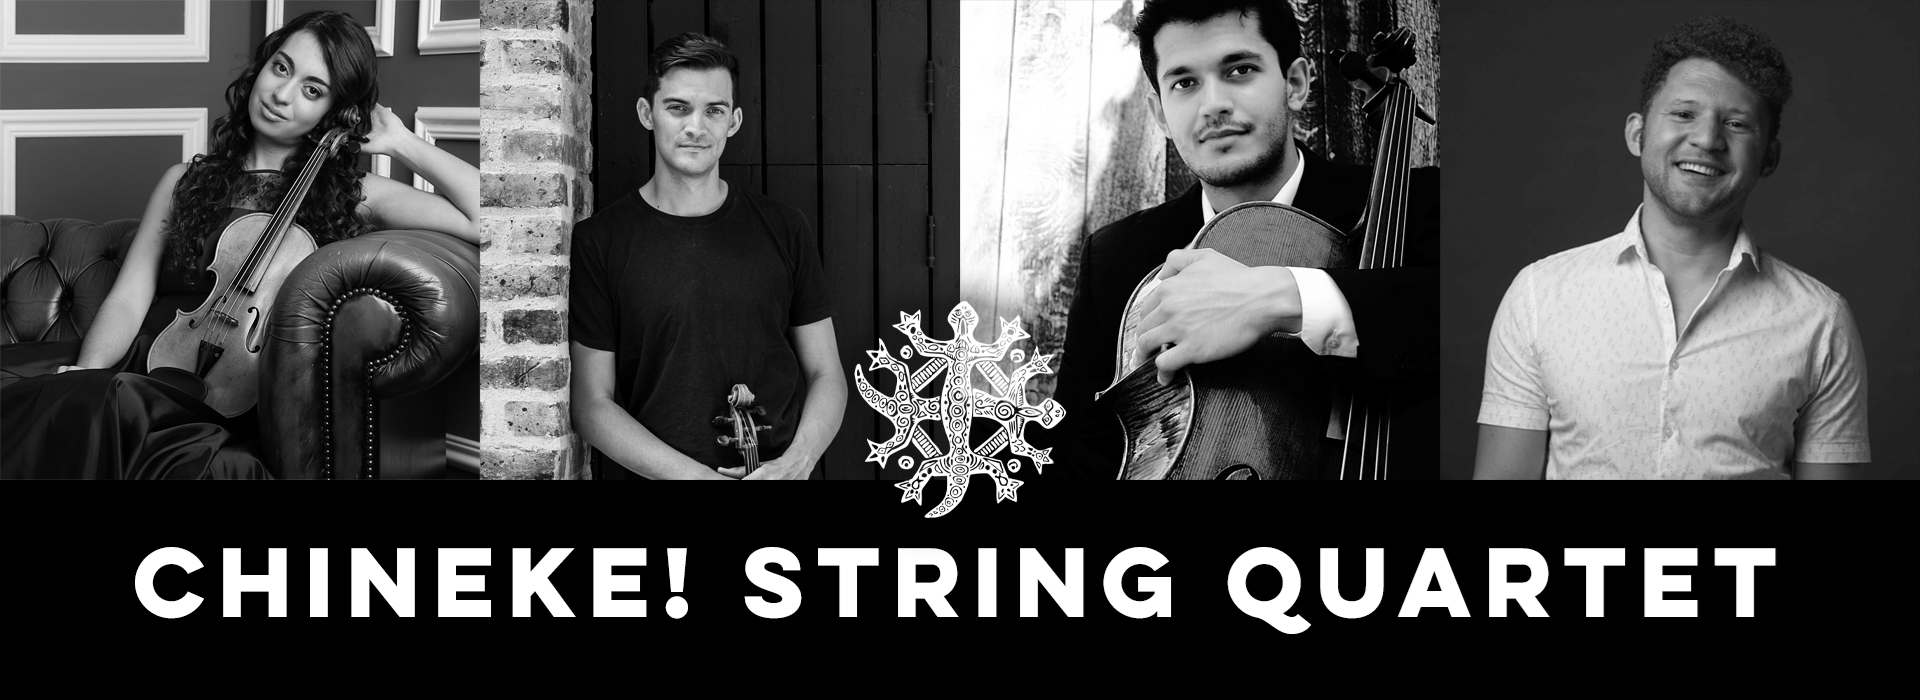 Chineke! String Quartet